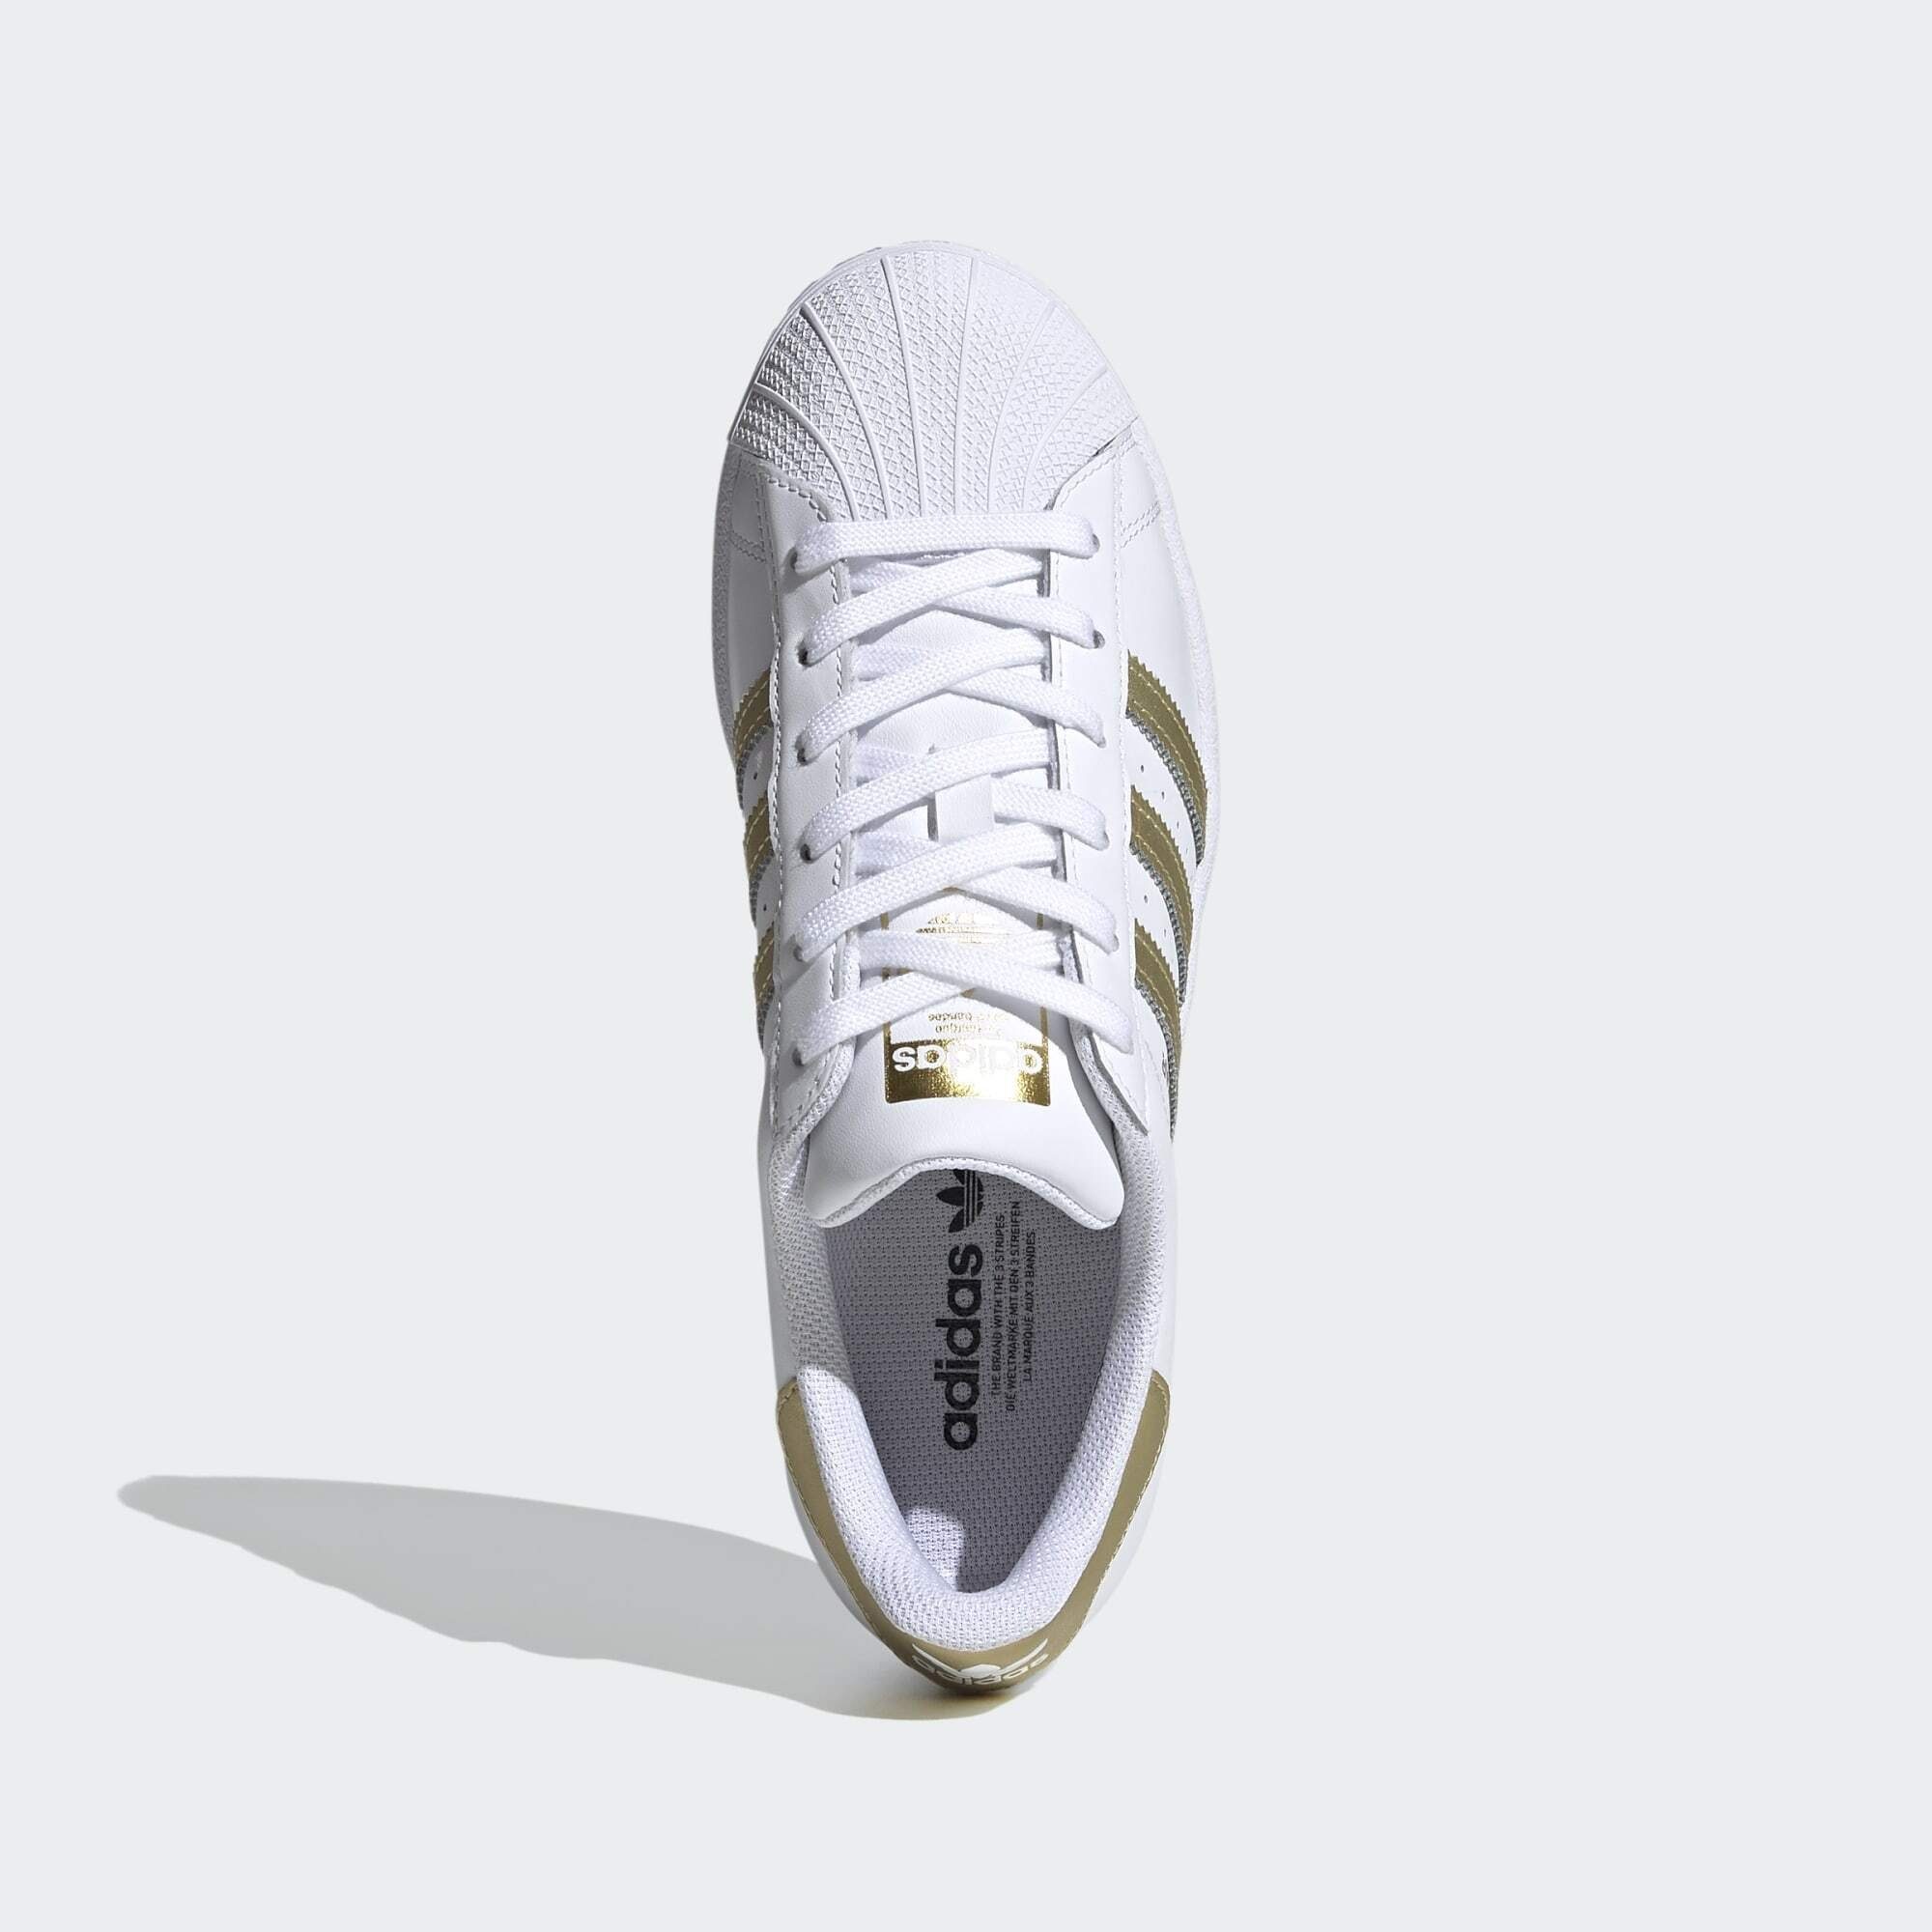 Sneaker Cloud White SUPERSTAR / Originals SCHUH Metallic / Cloud White adidas Gold